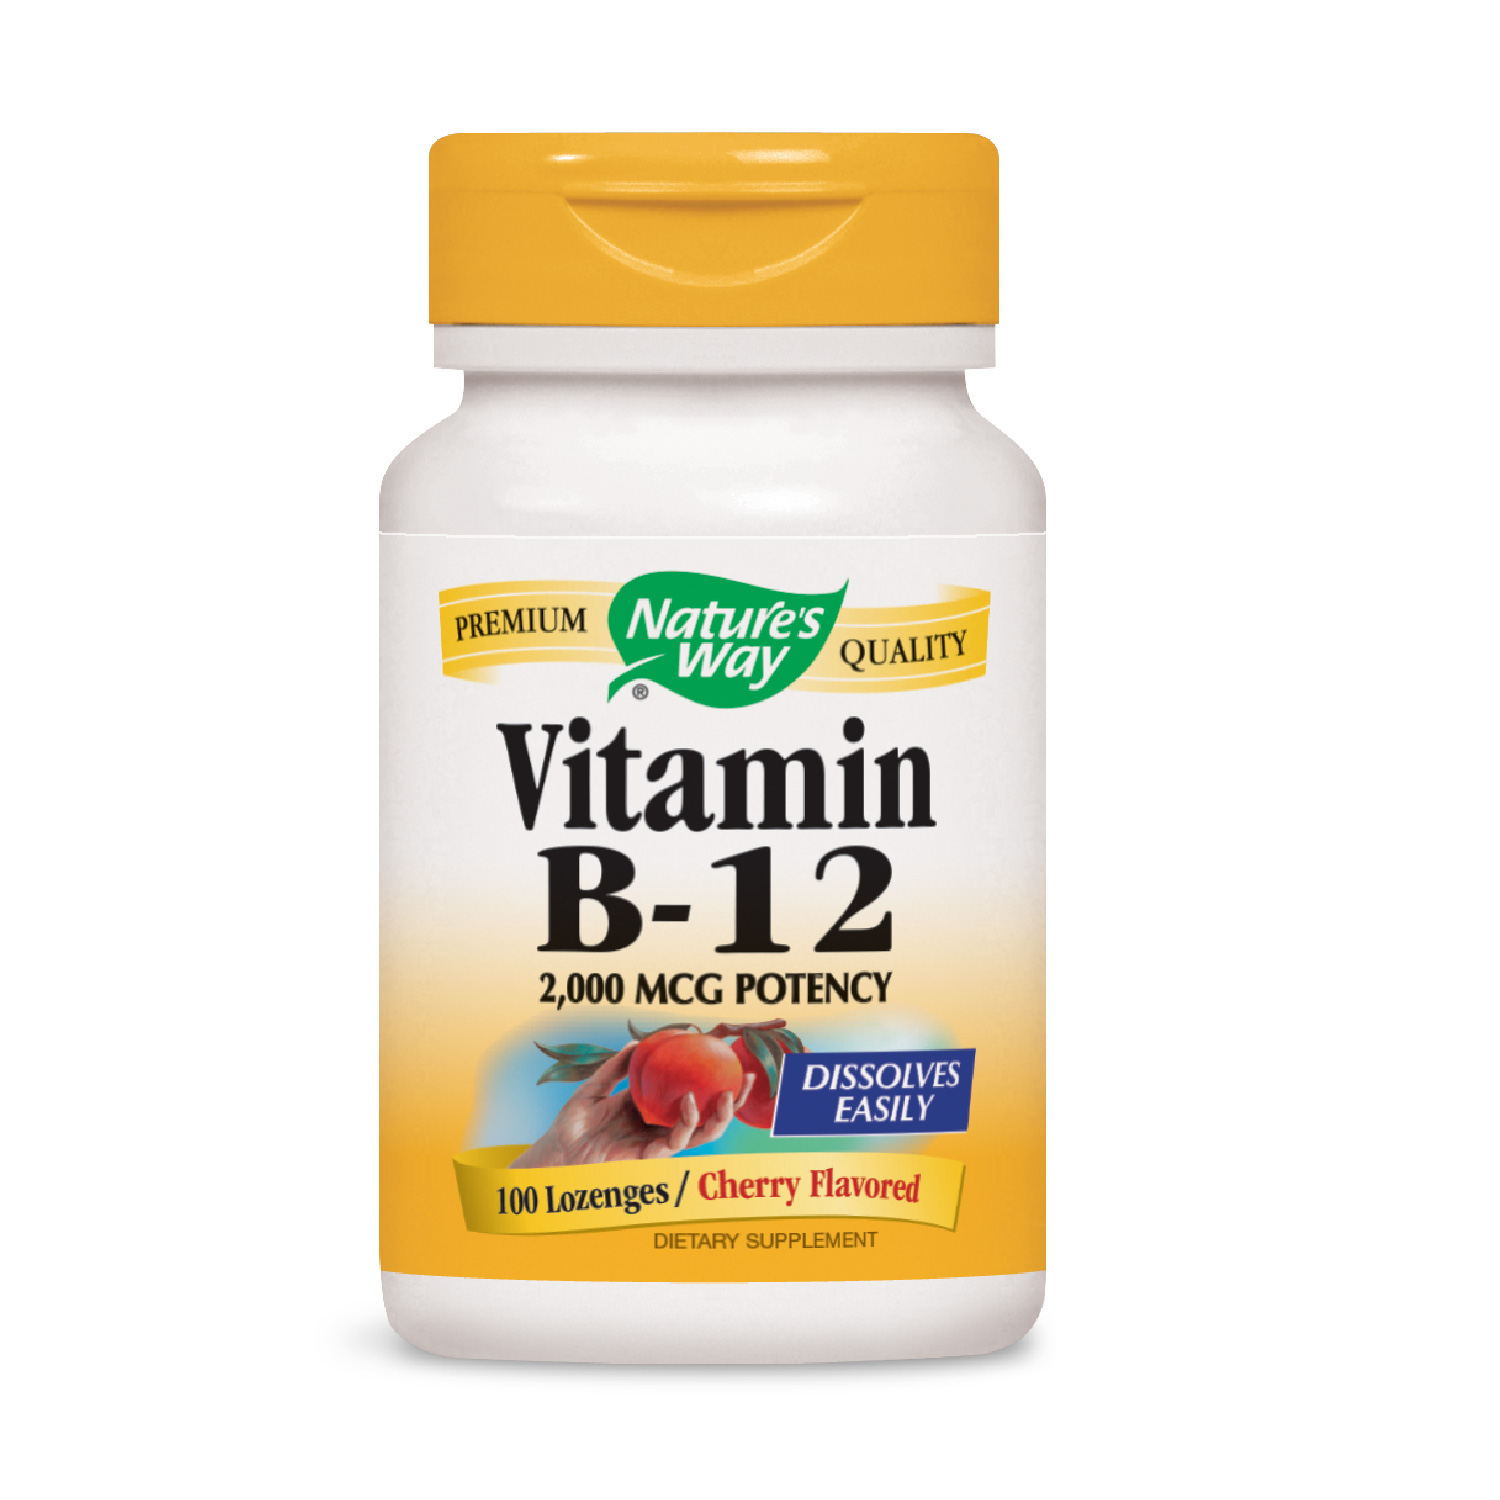 Витамин б12 в таблетках купить